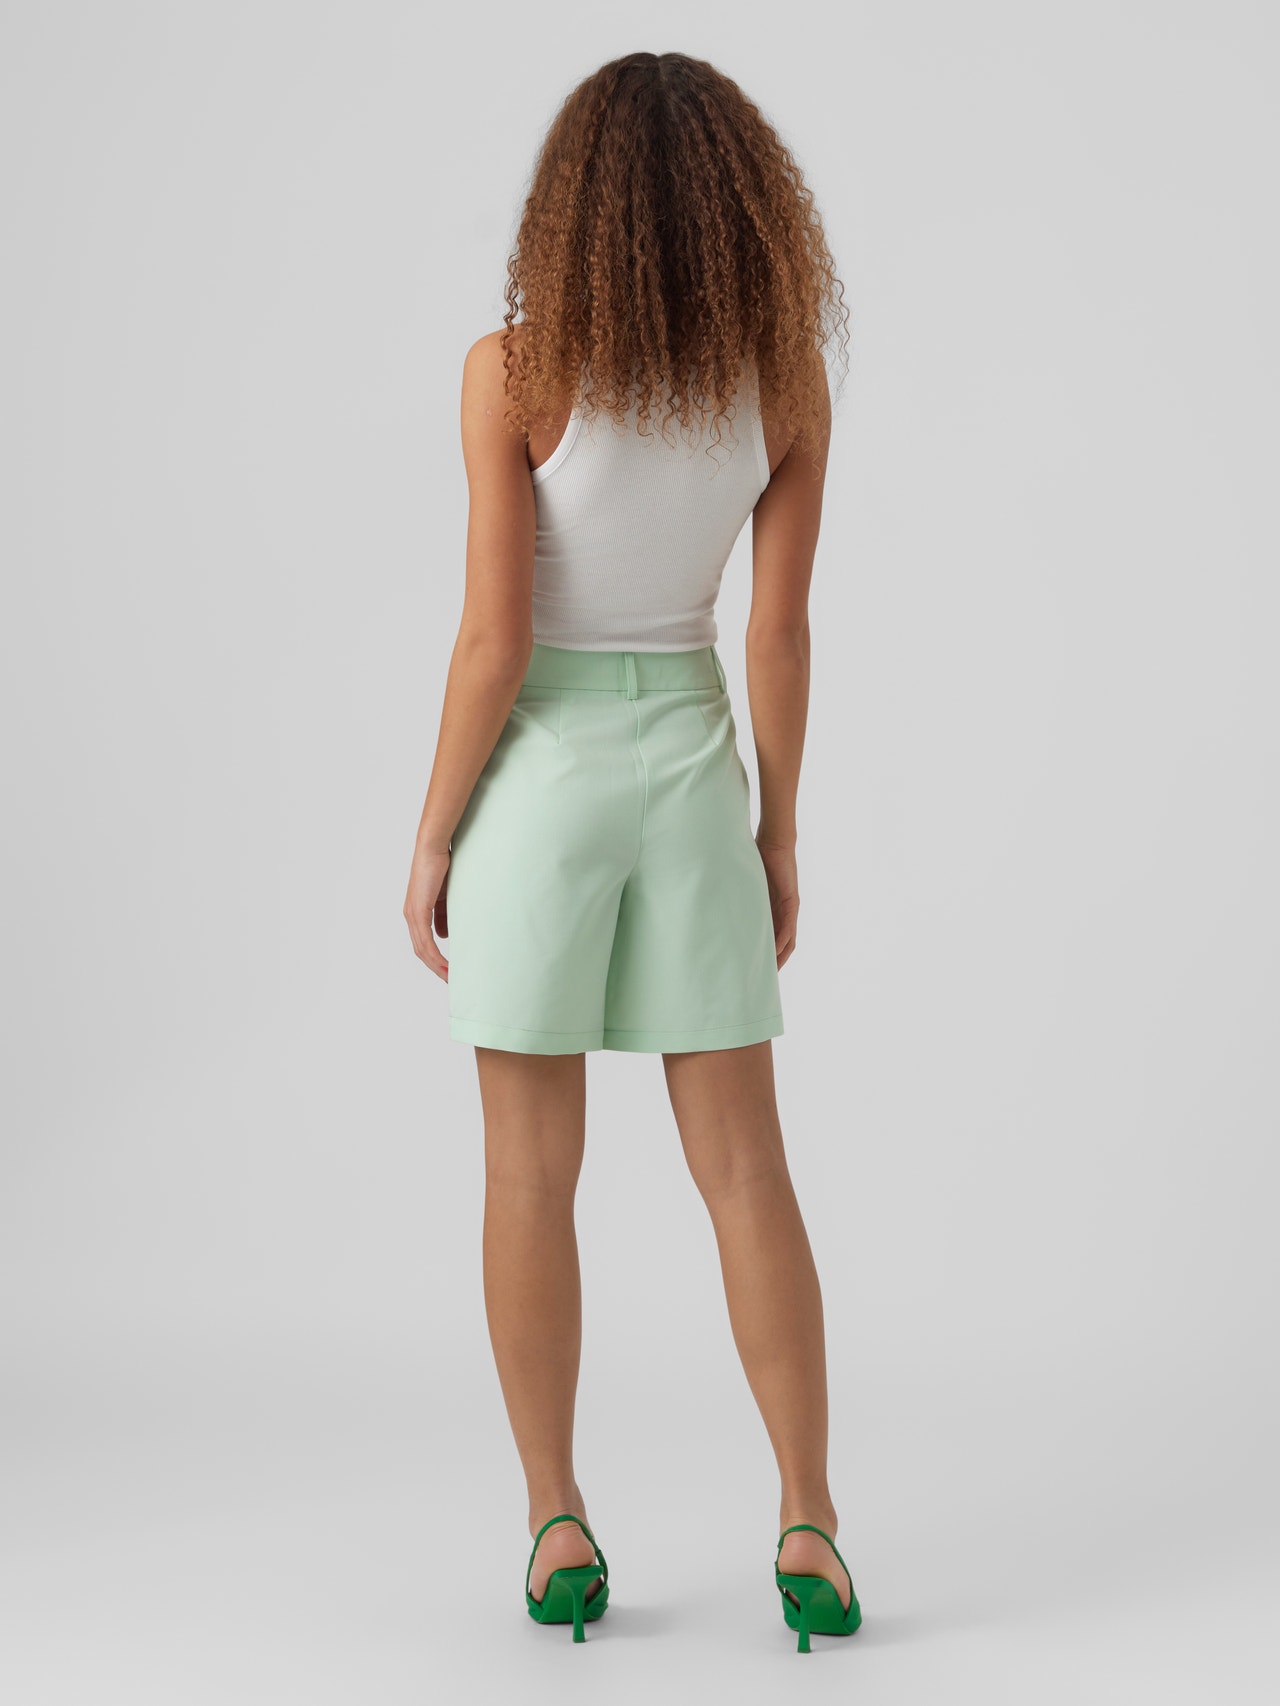 Vero Moda VMZELDA Shorts -Mist Green - 10259210